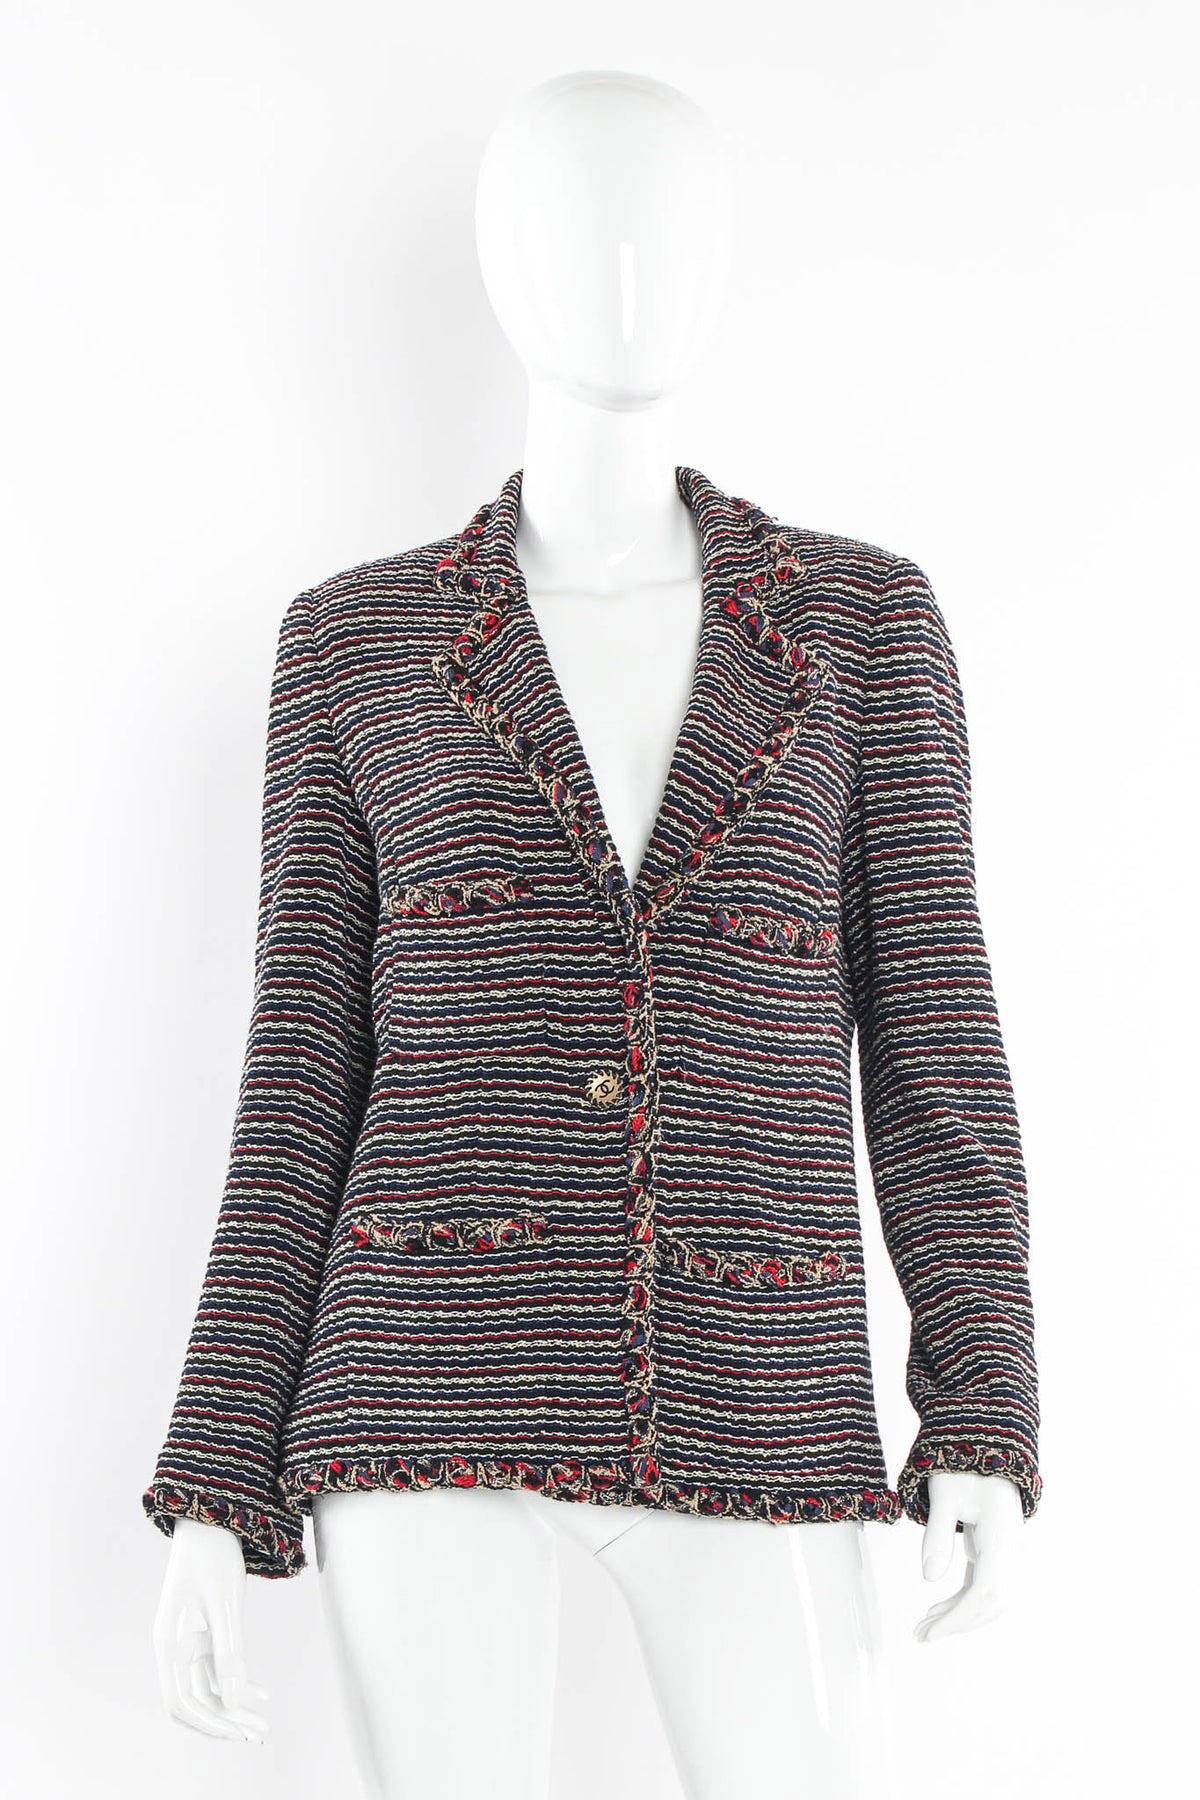 Chanel Runway Saint-Tropez Lesage Tweed Jacket For Sale 5